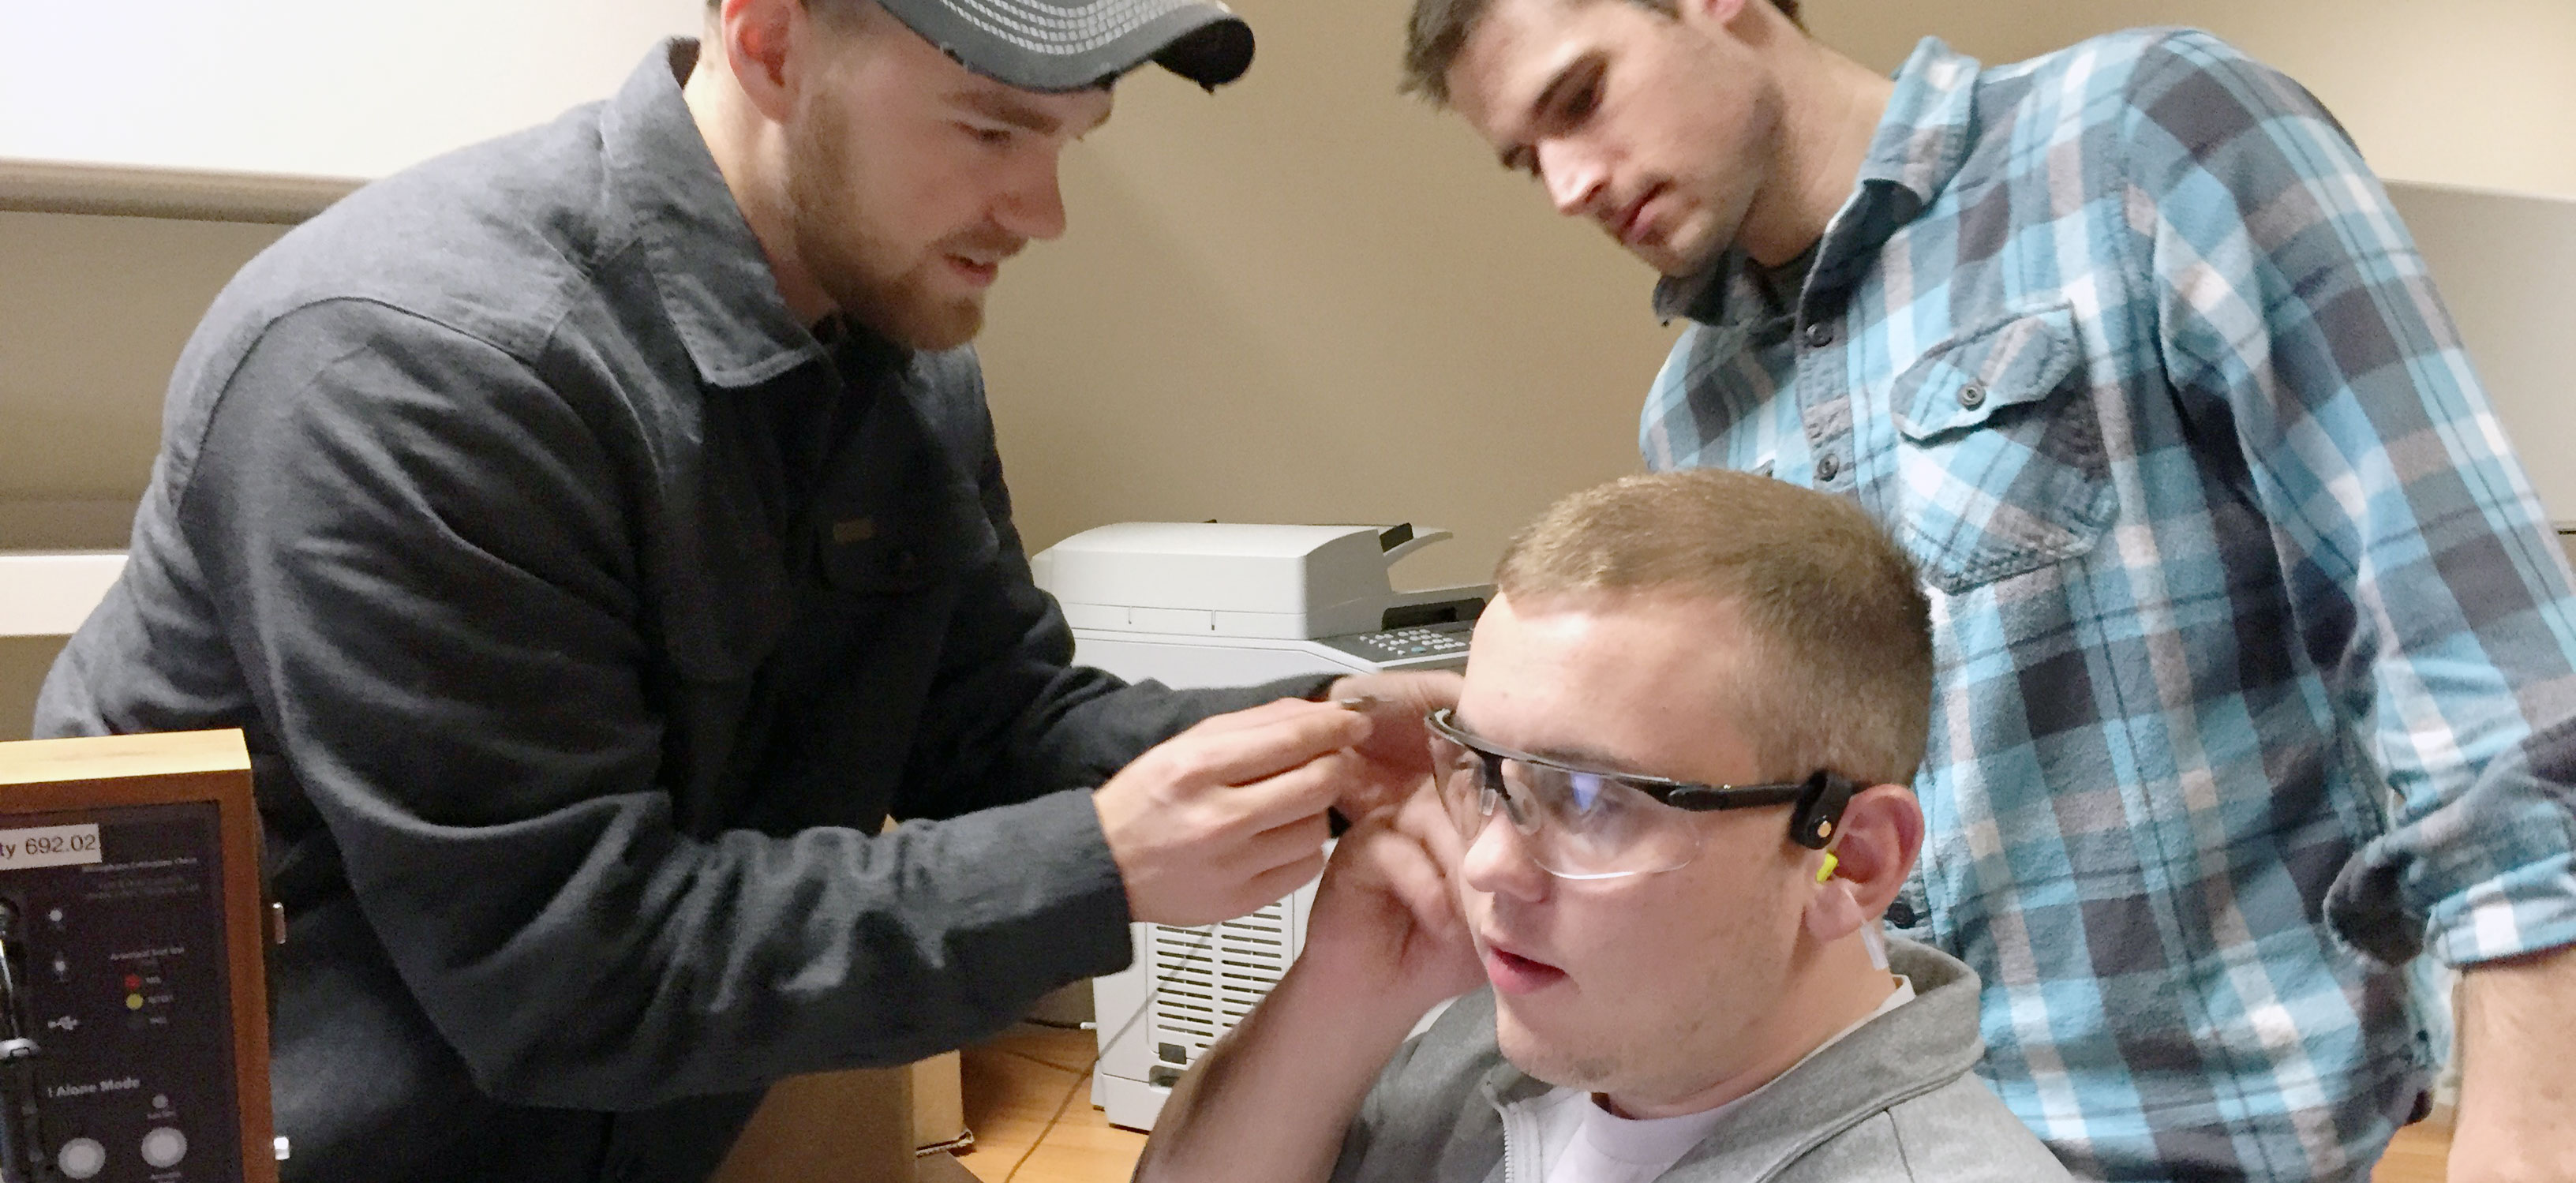 Students testing ear plugs